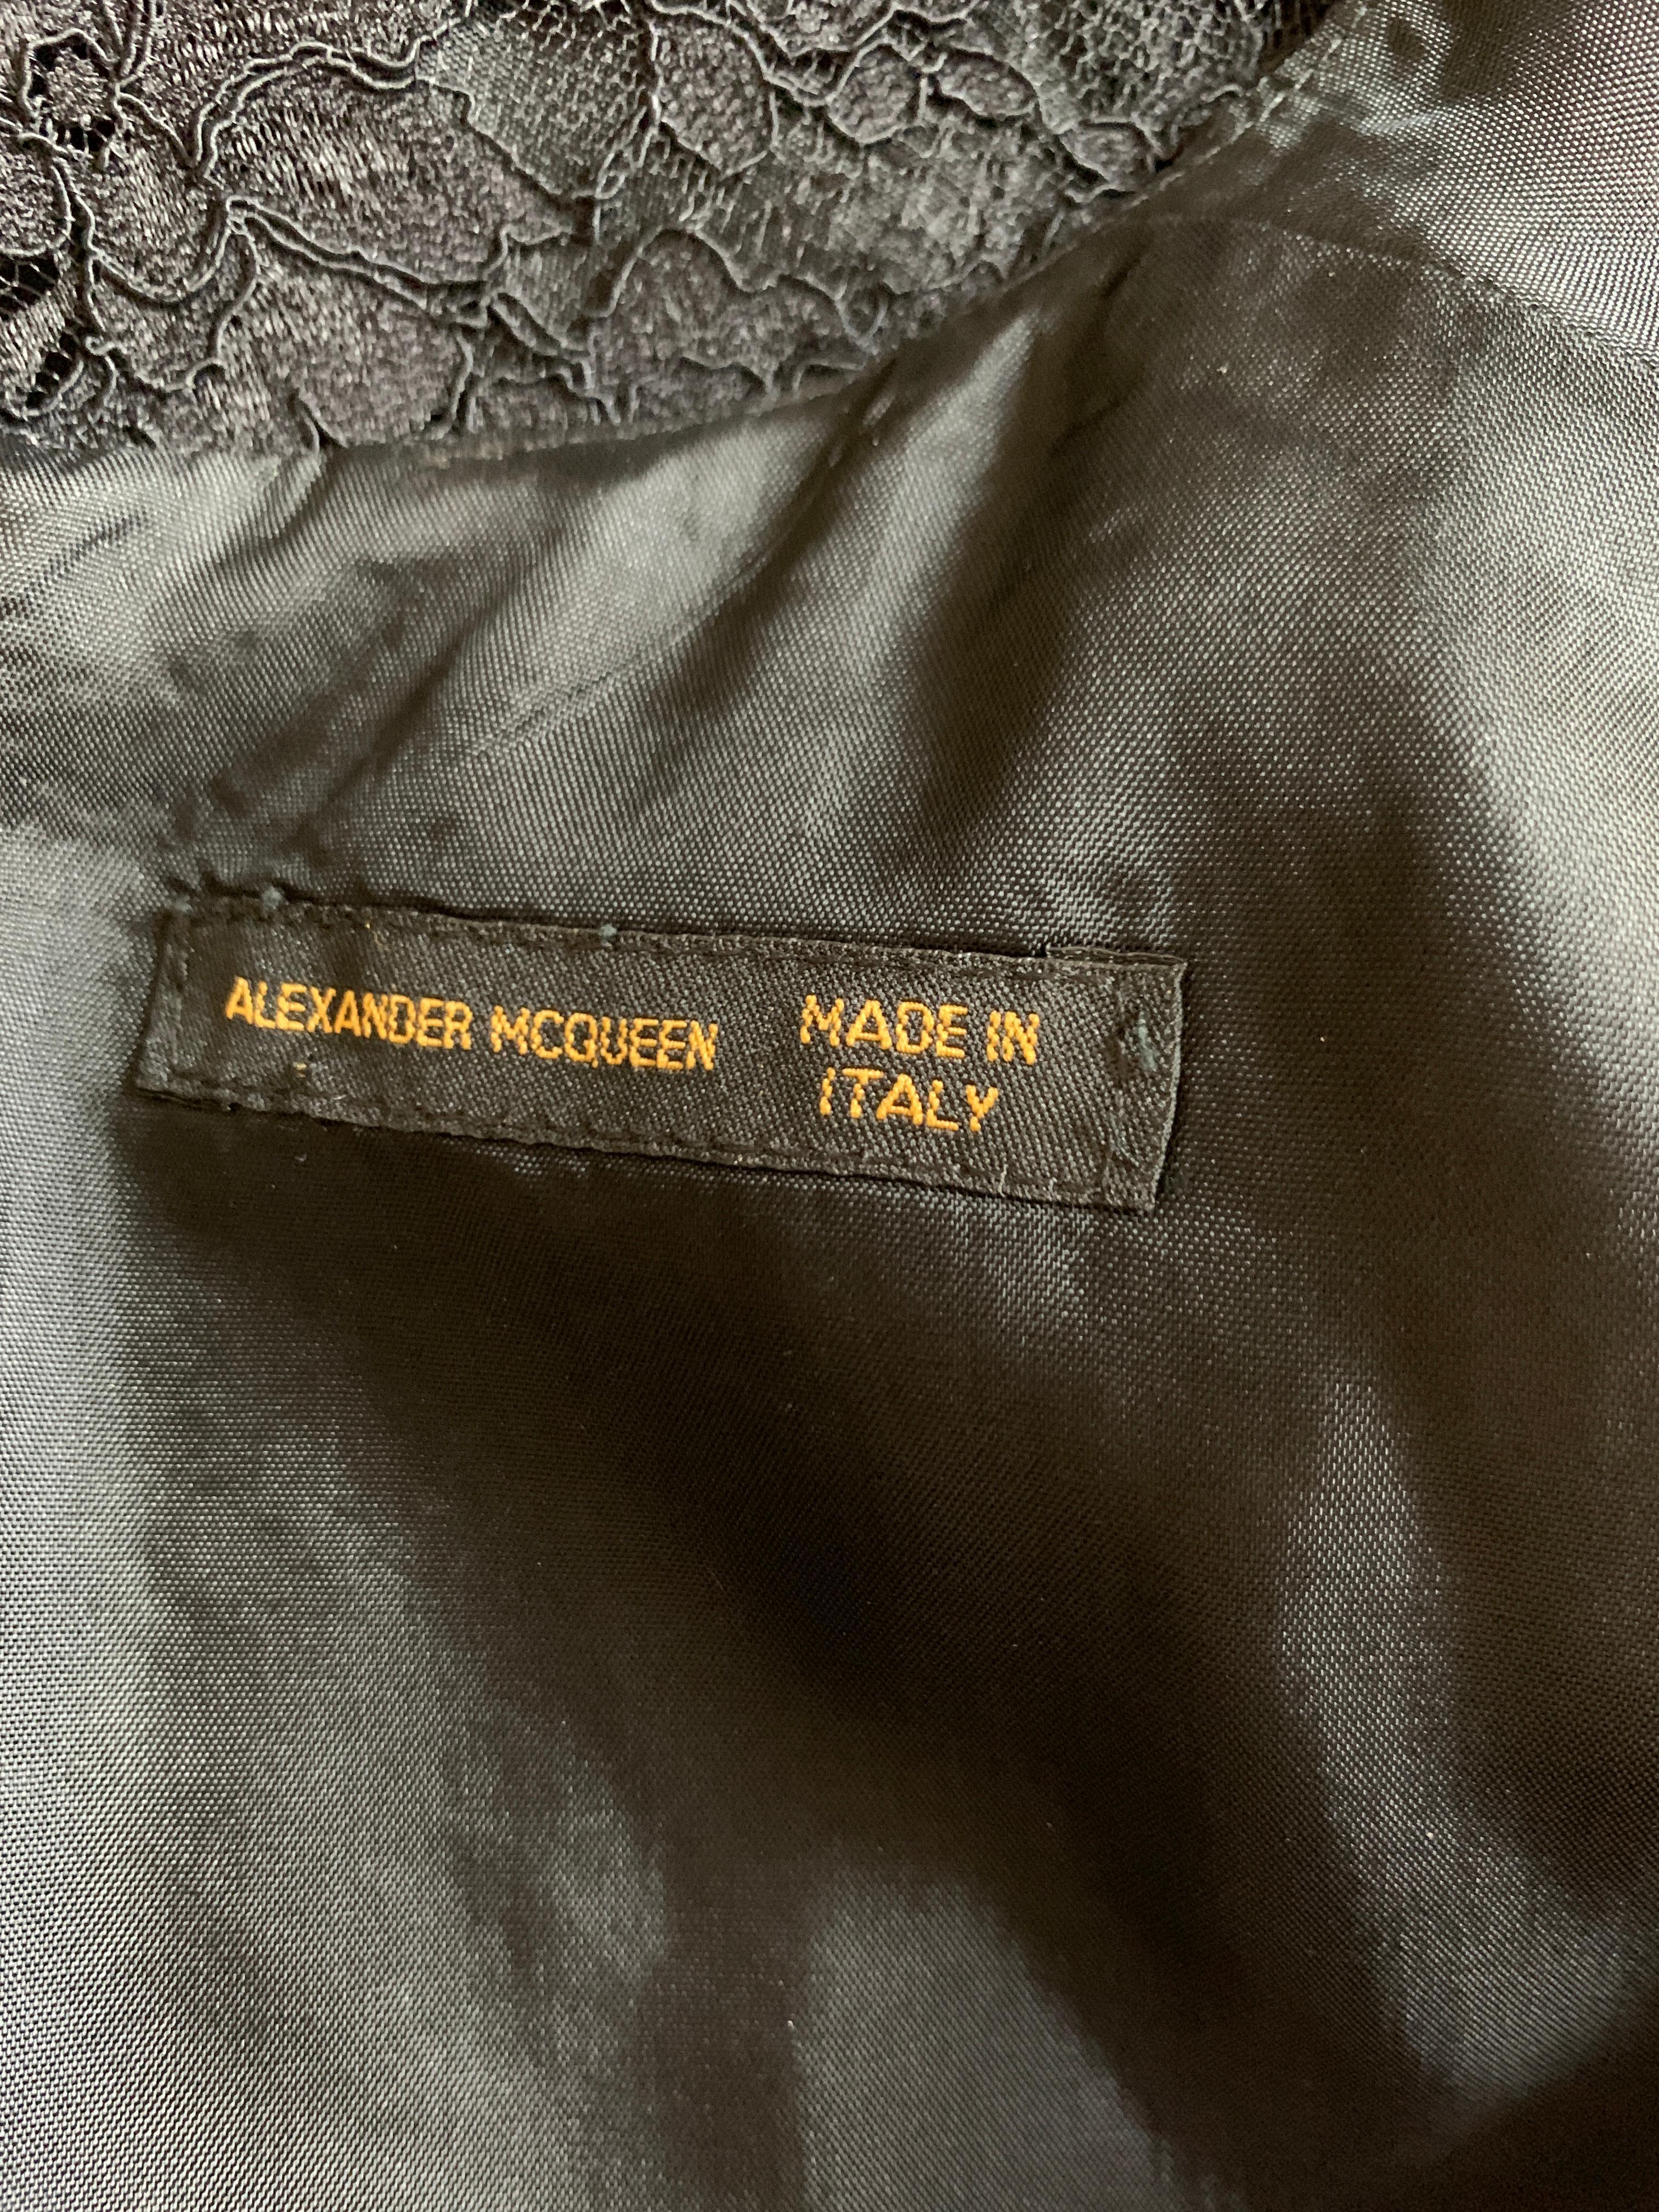 Alexander McQueen 1990s Black Lace Sleeveless Dress Vintage 1